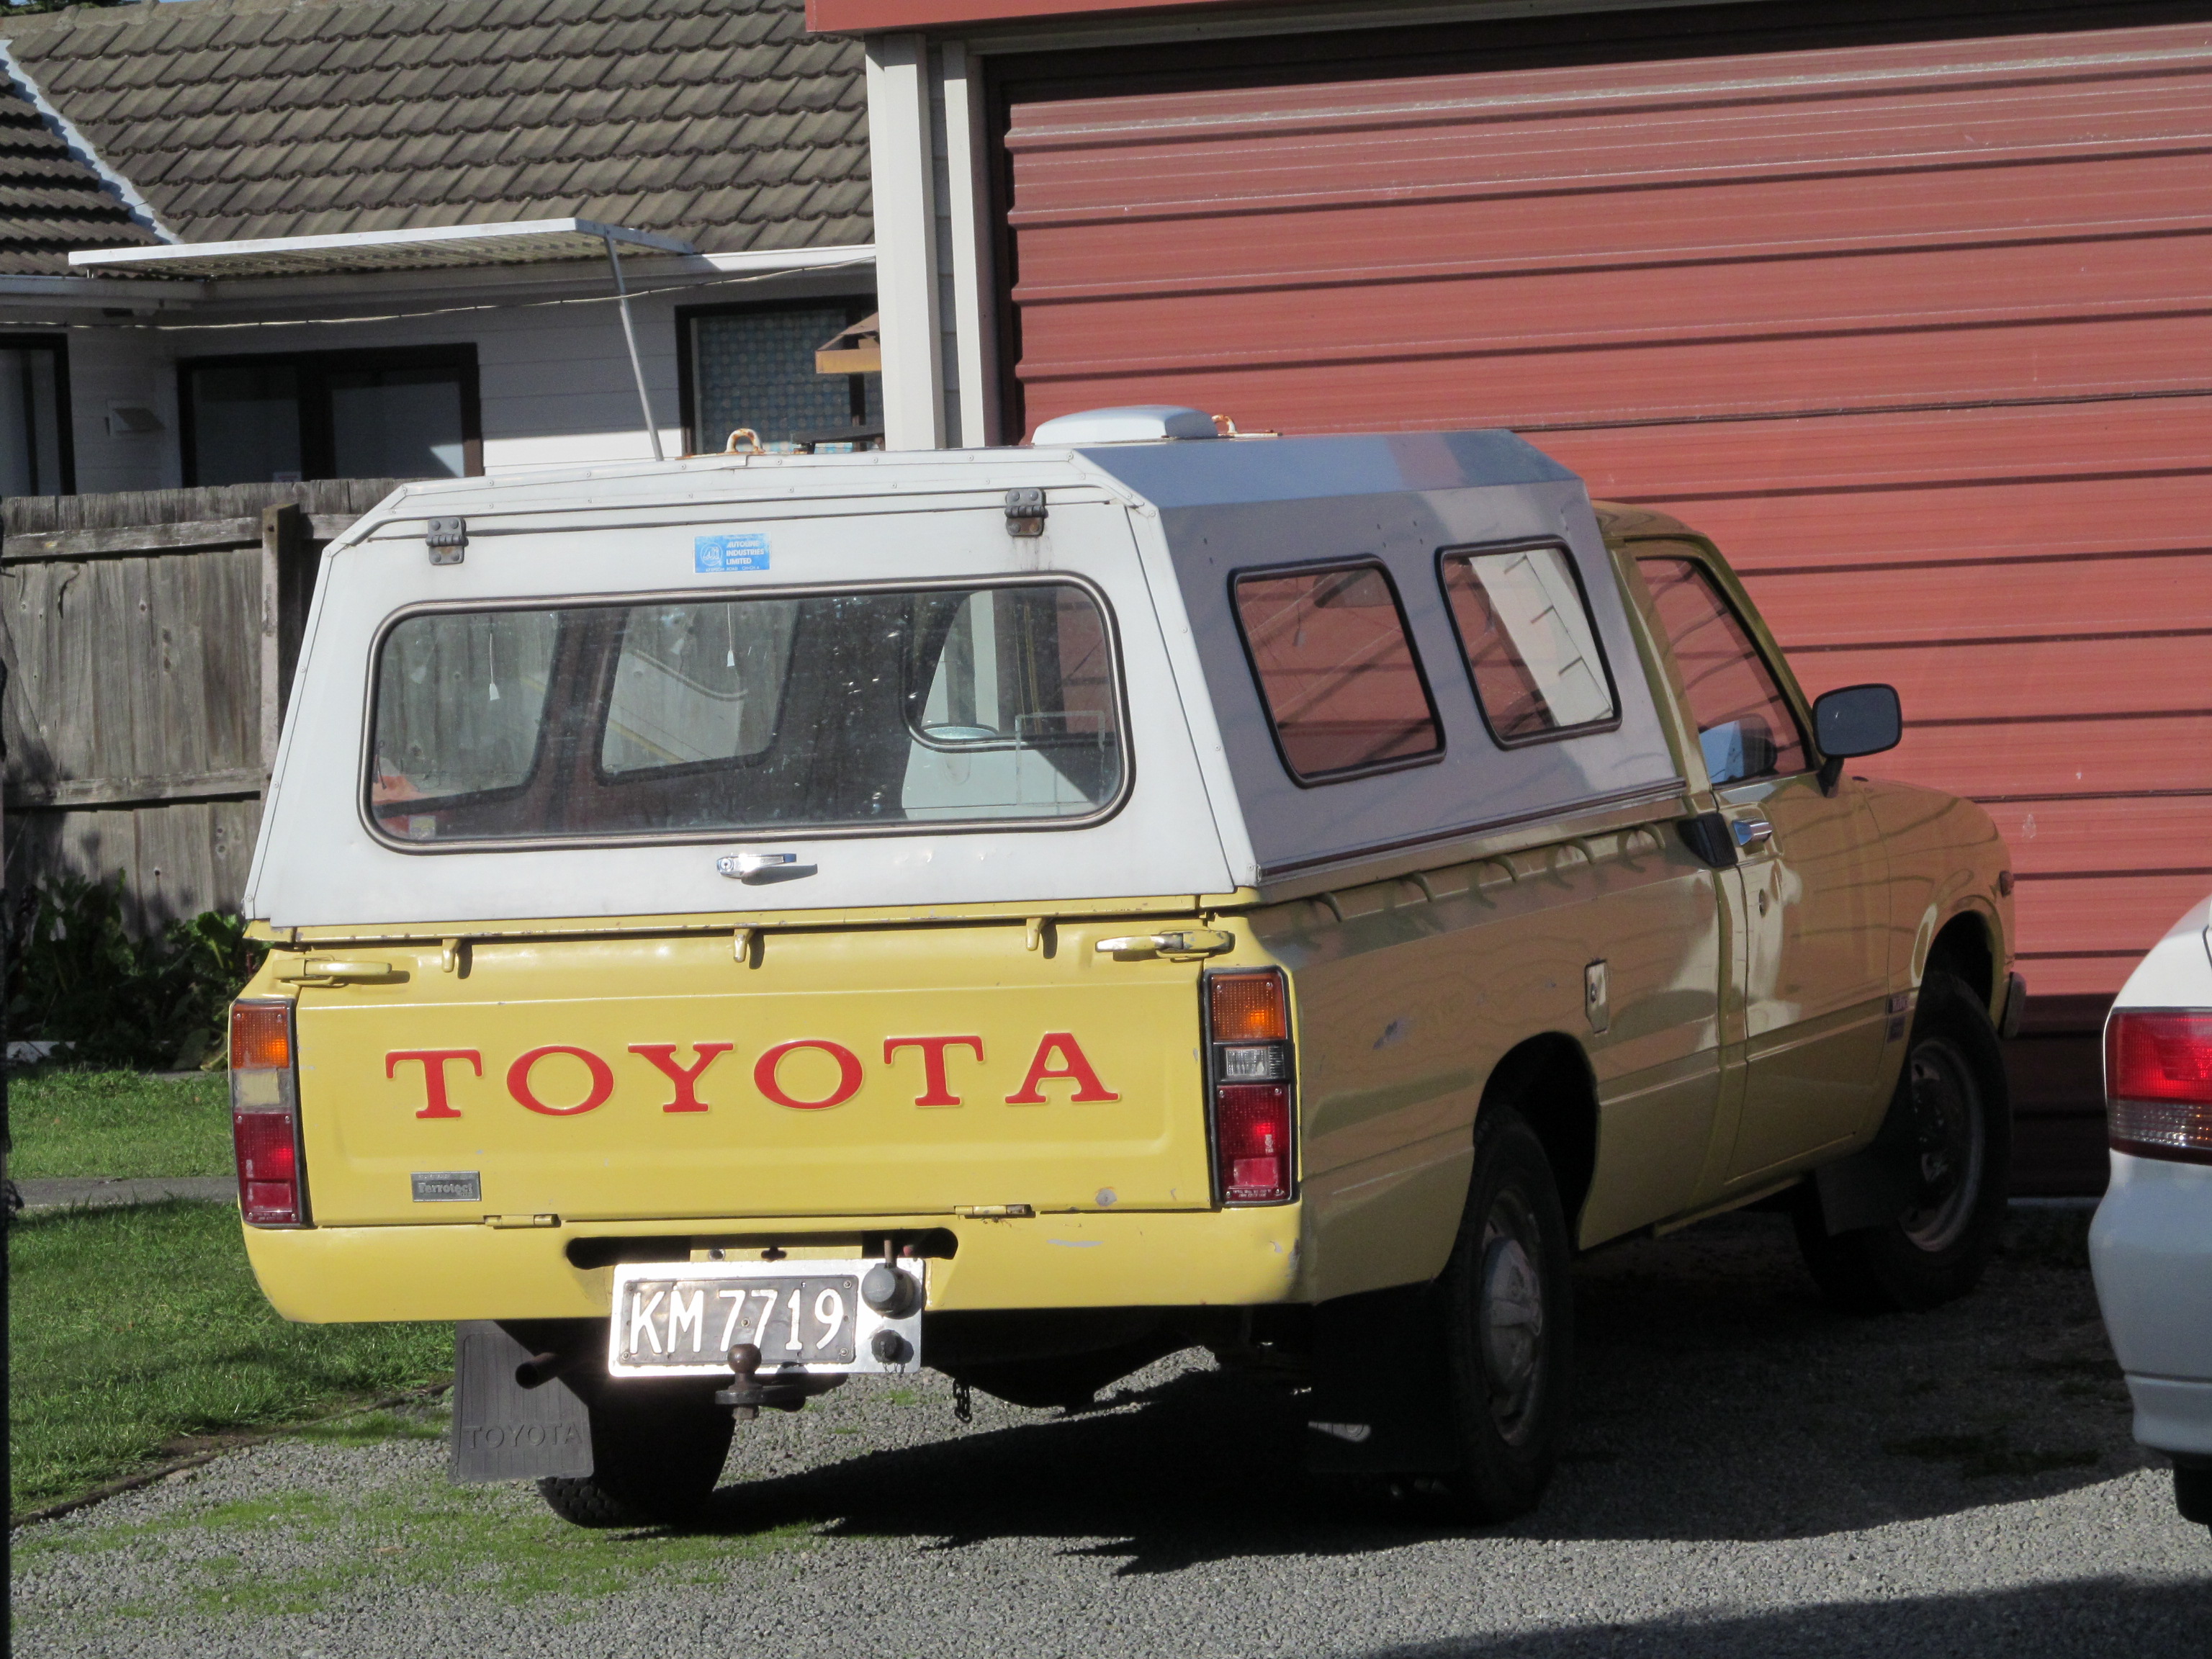 File:1982 Toyota Hilux (8765417770).jpg - Wikipedia